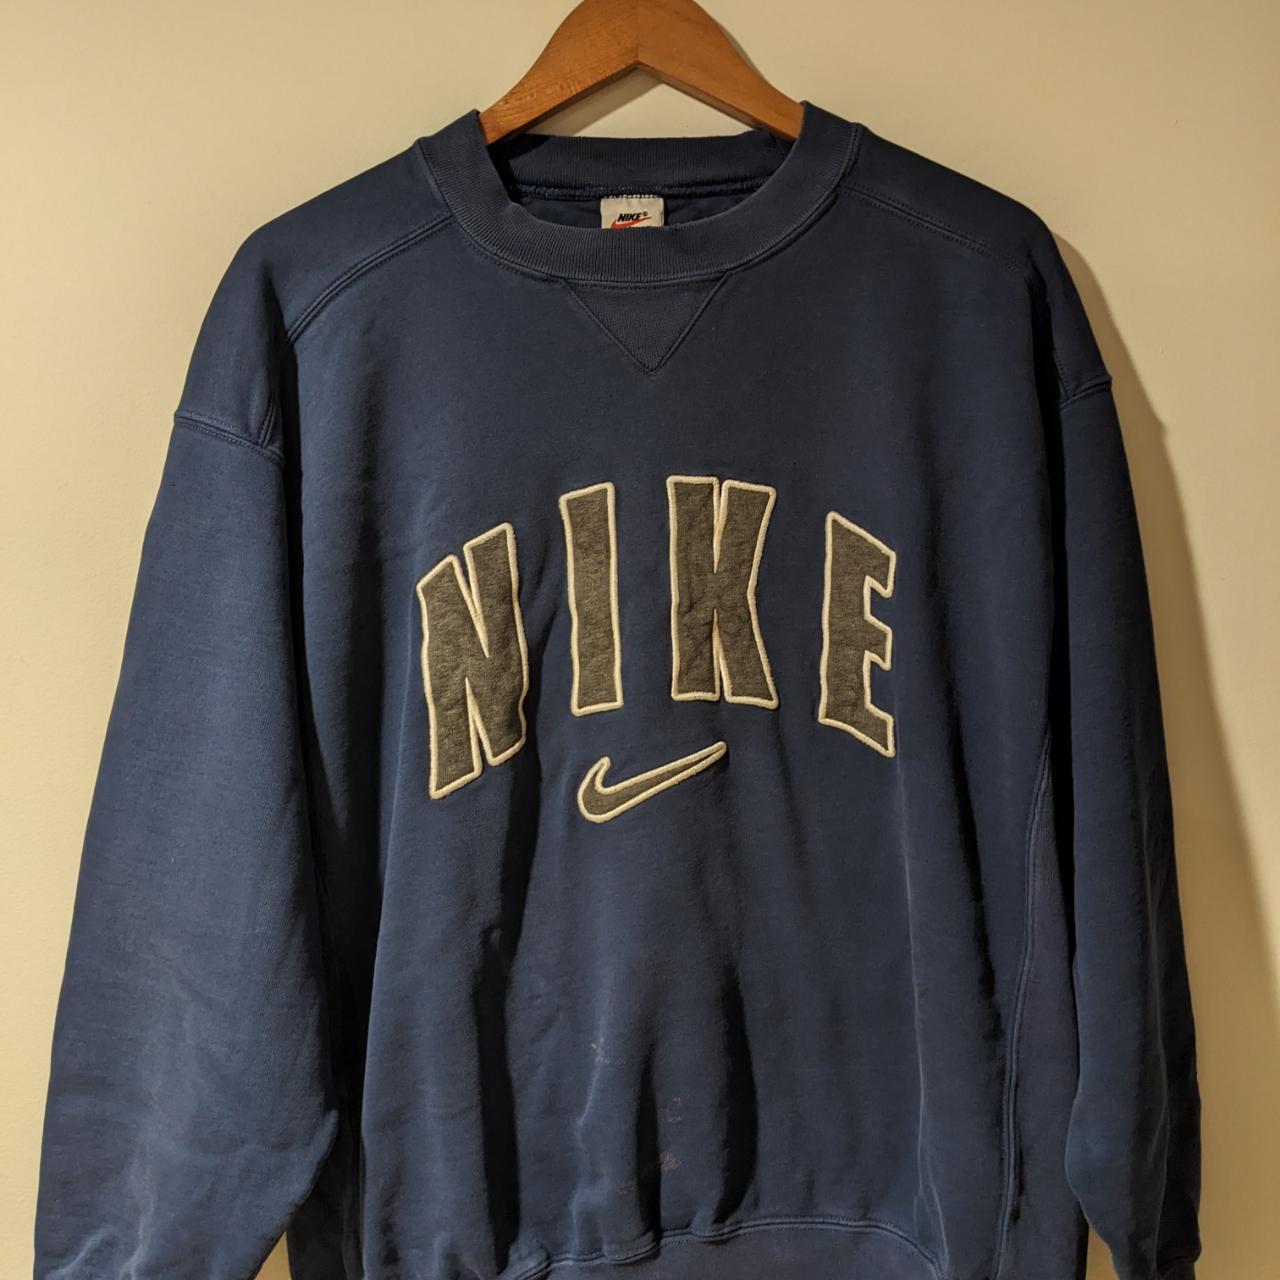 Vintage 90s Nike Arch Logo Swoosh Blue Medium... - Depop